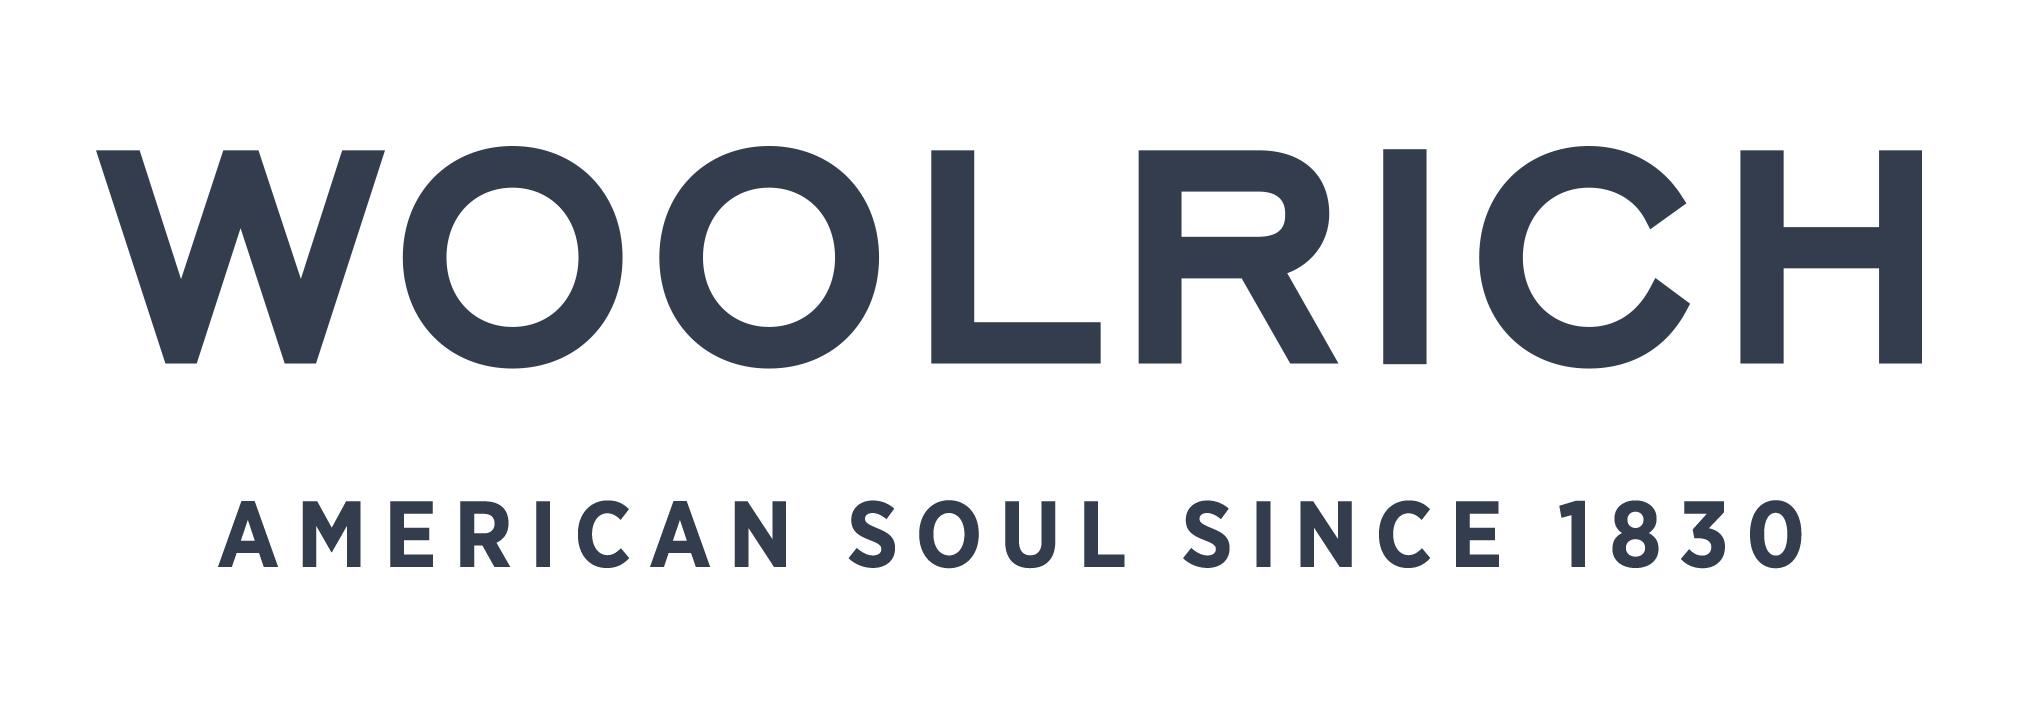 Woolrich Logo - Woolrich - American Soul Collaboration